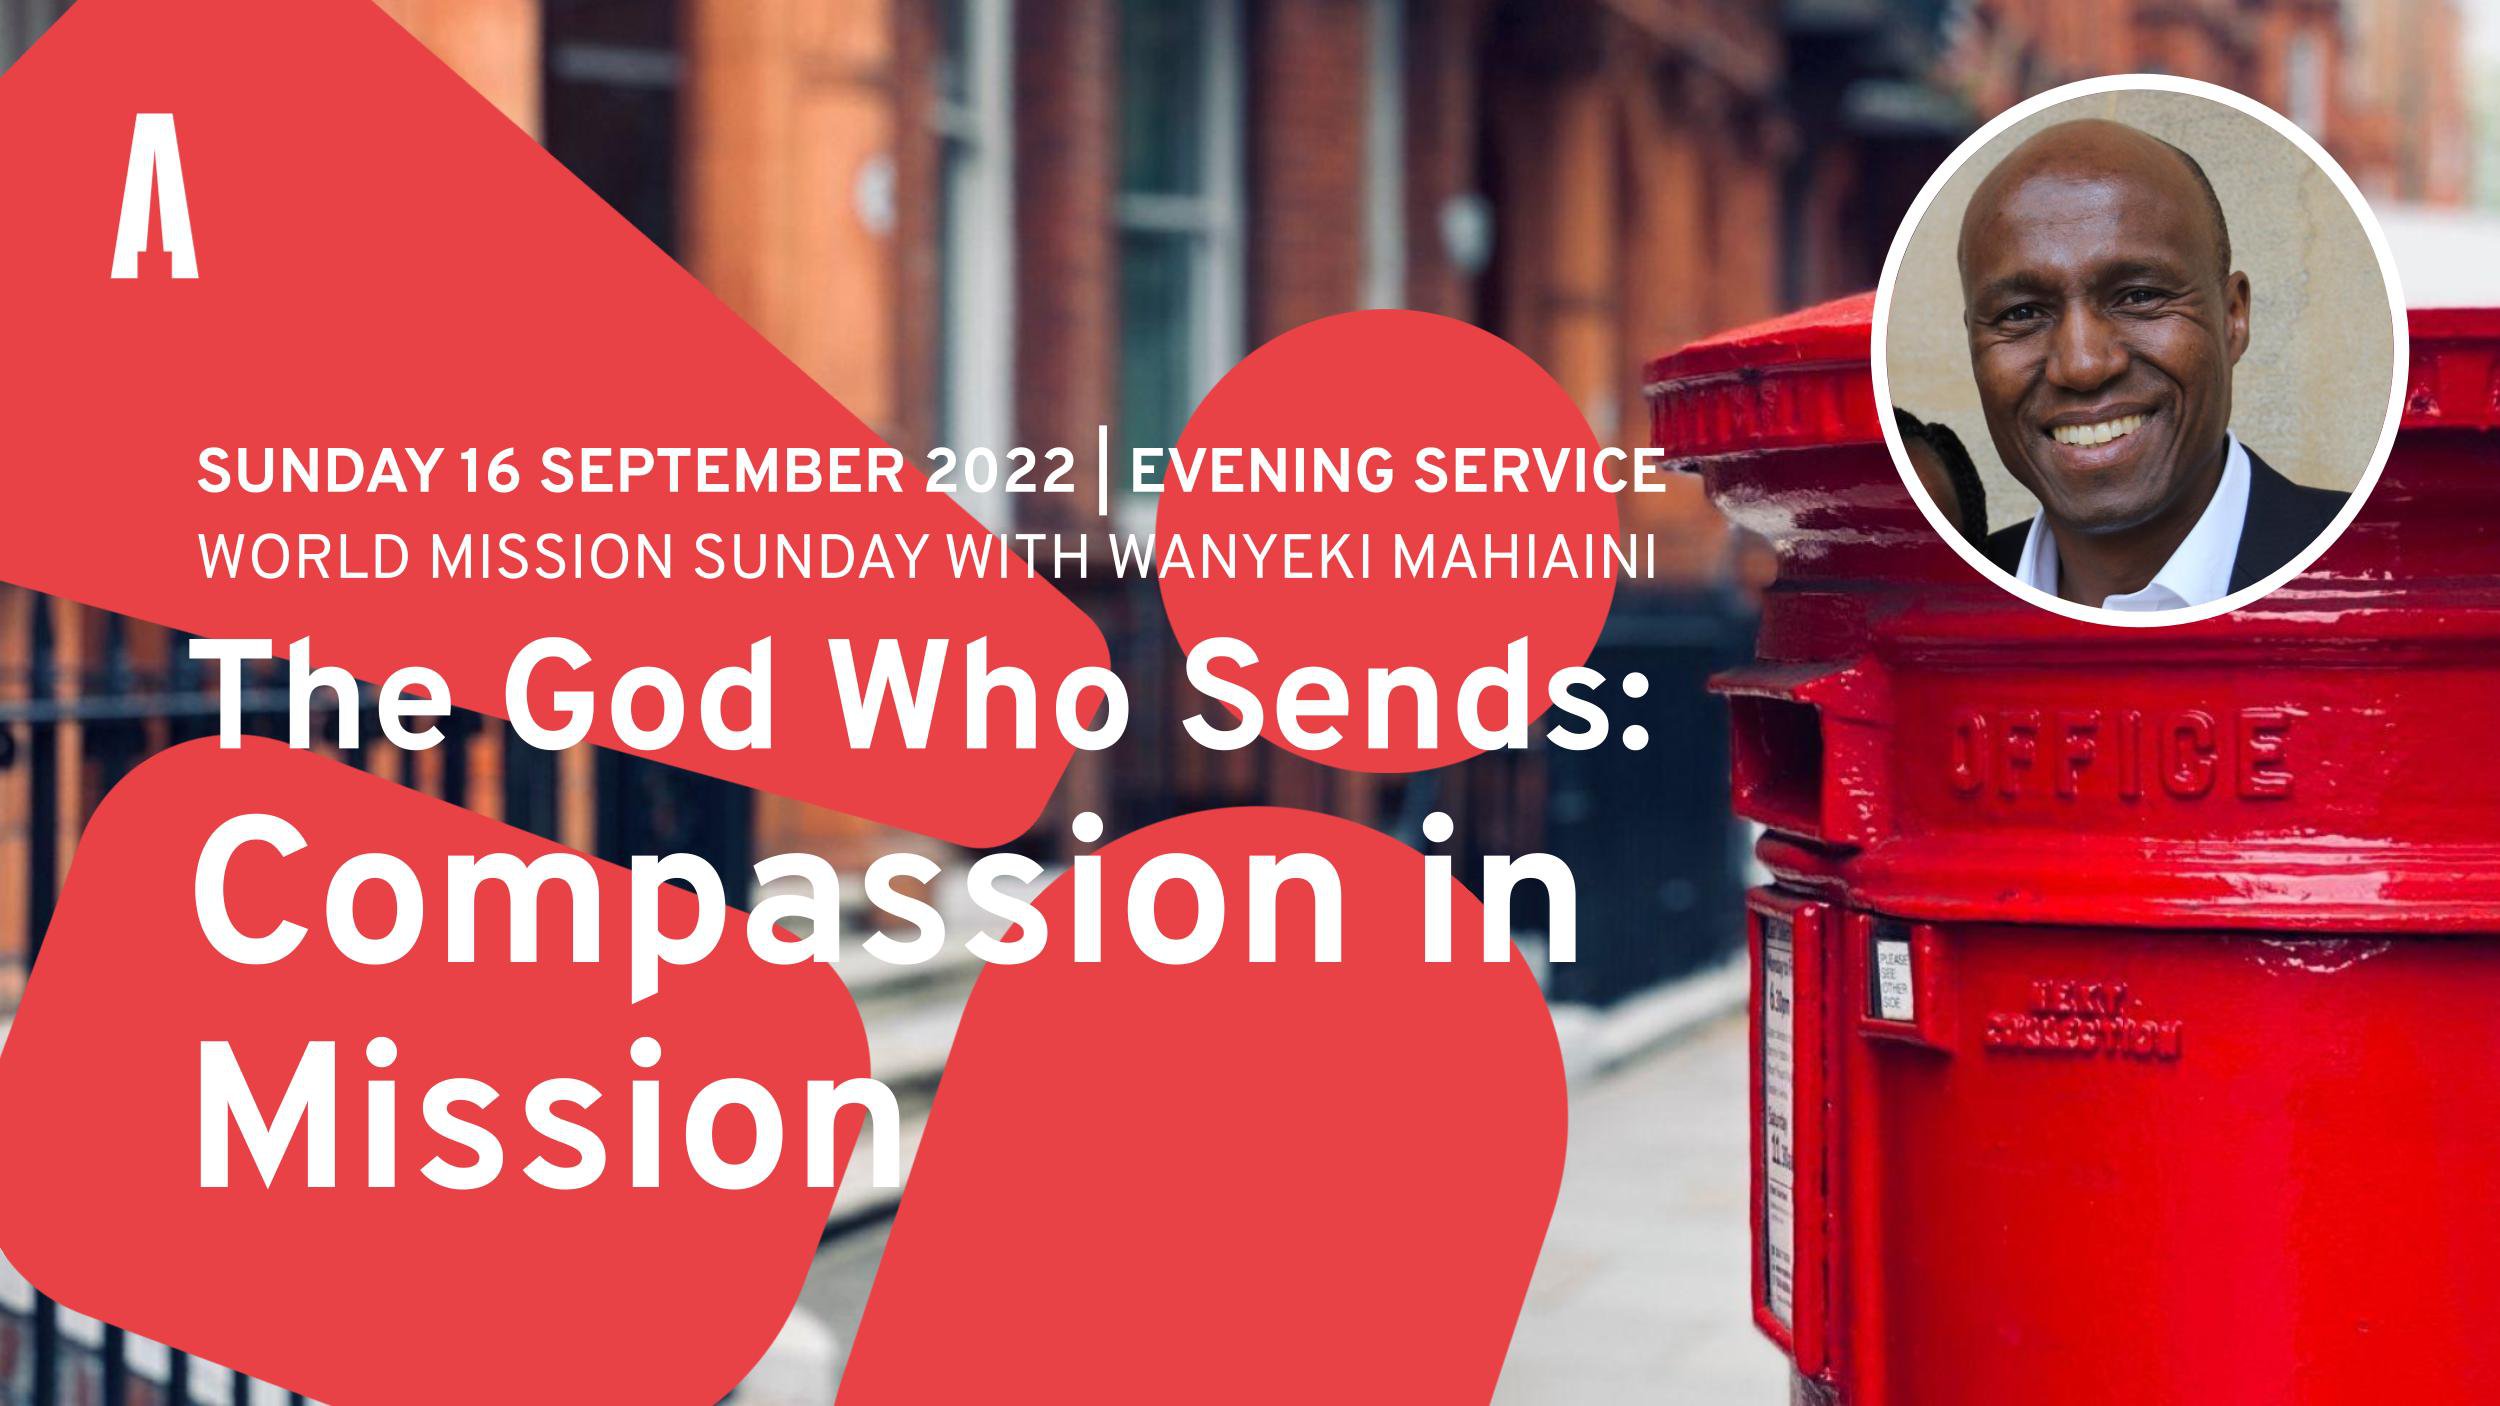 Compassion in Mission